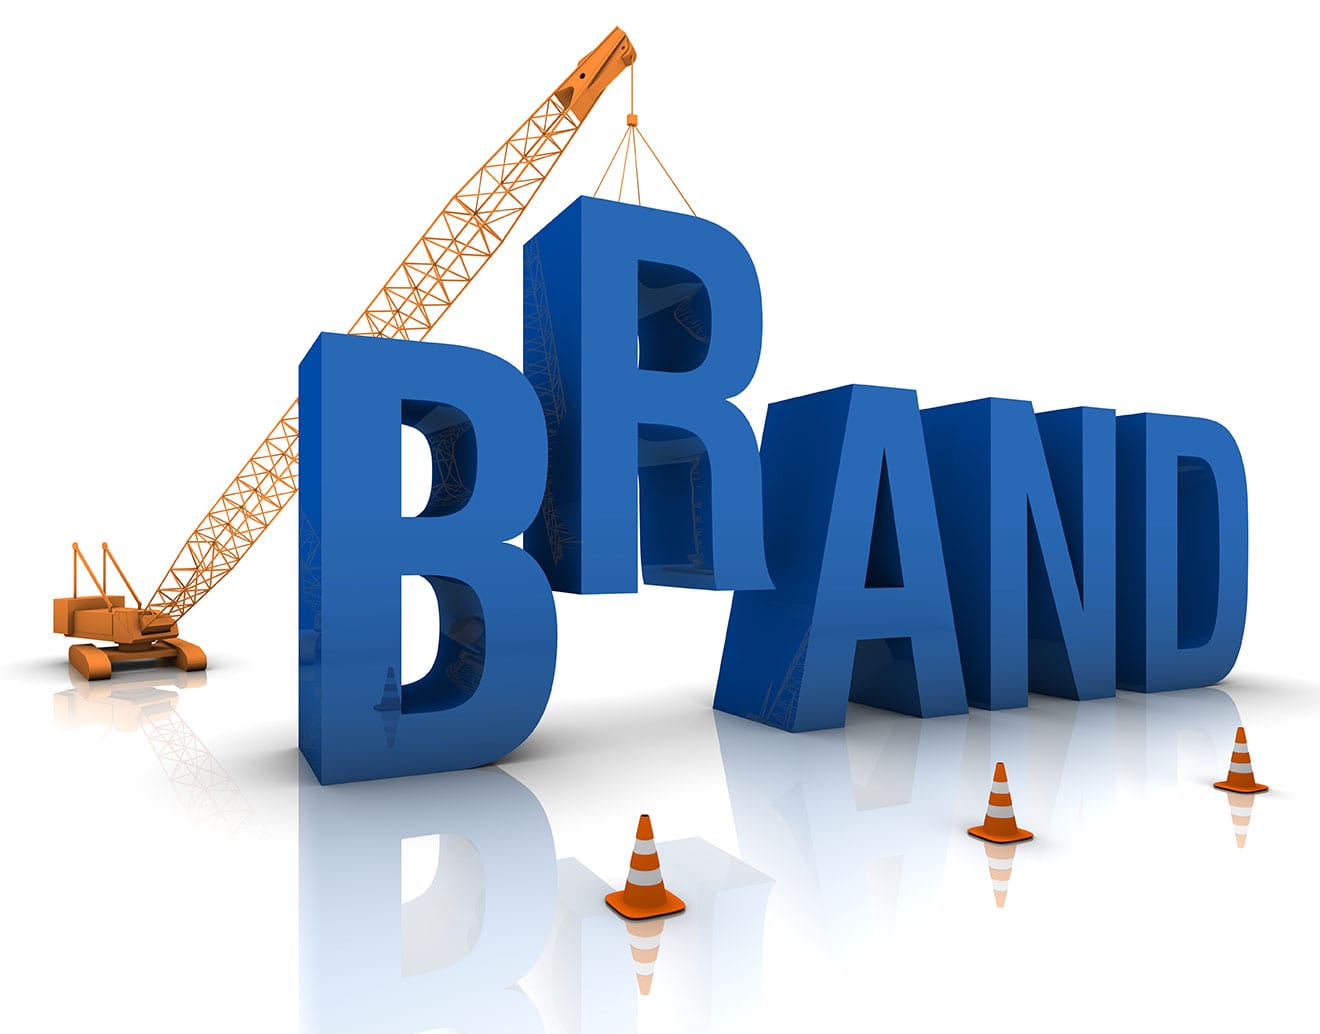 Brand Building Crane